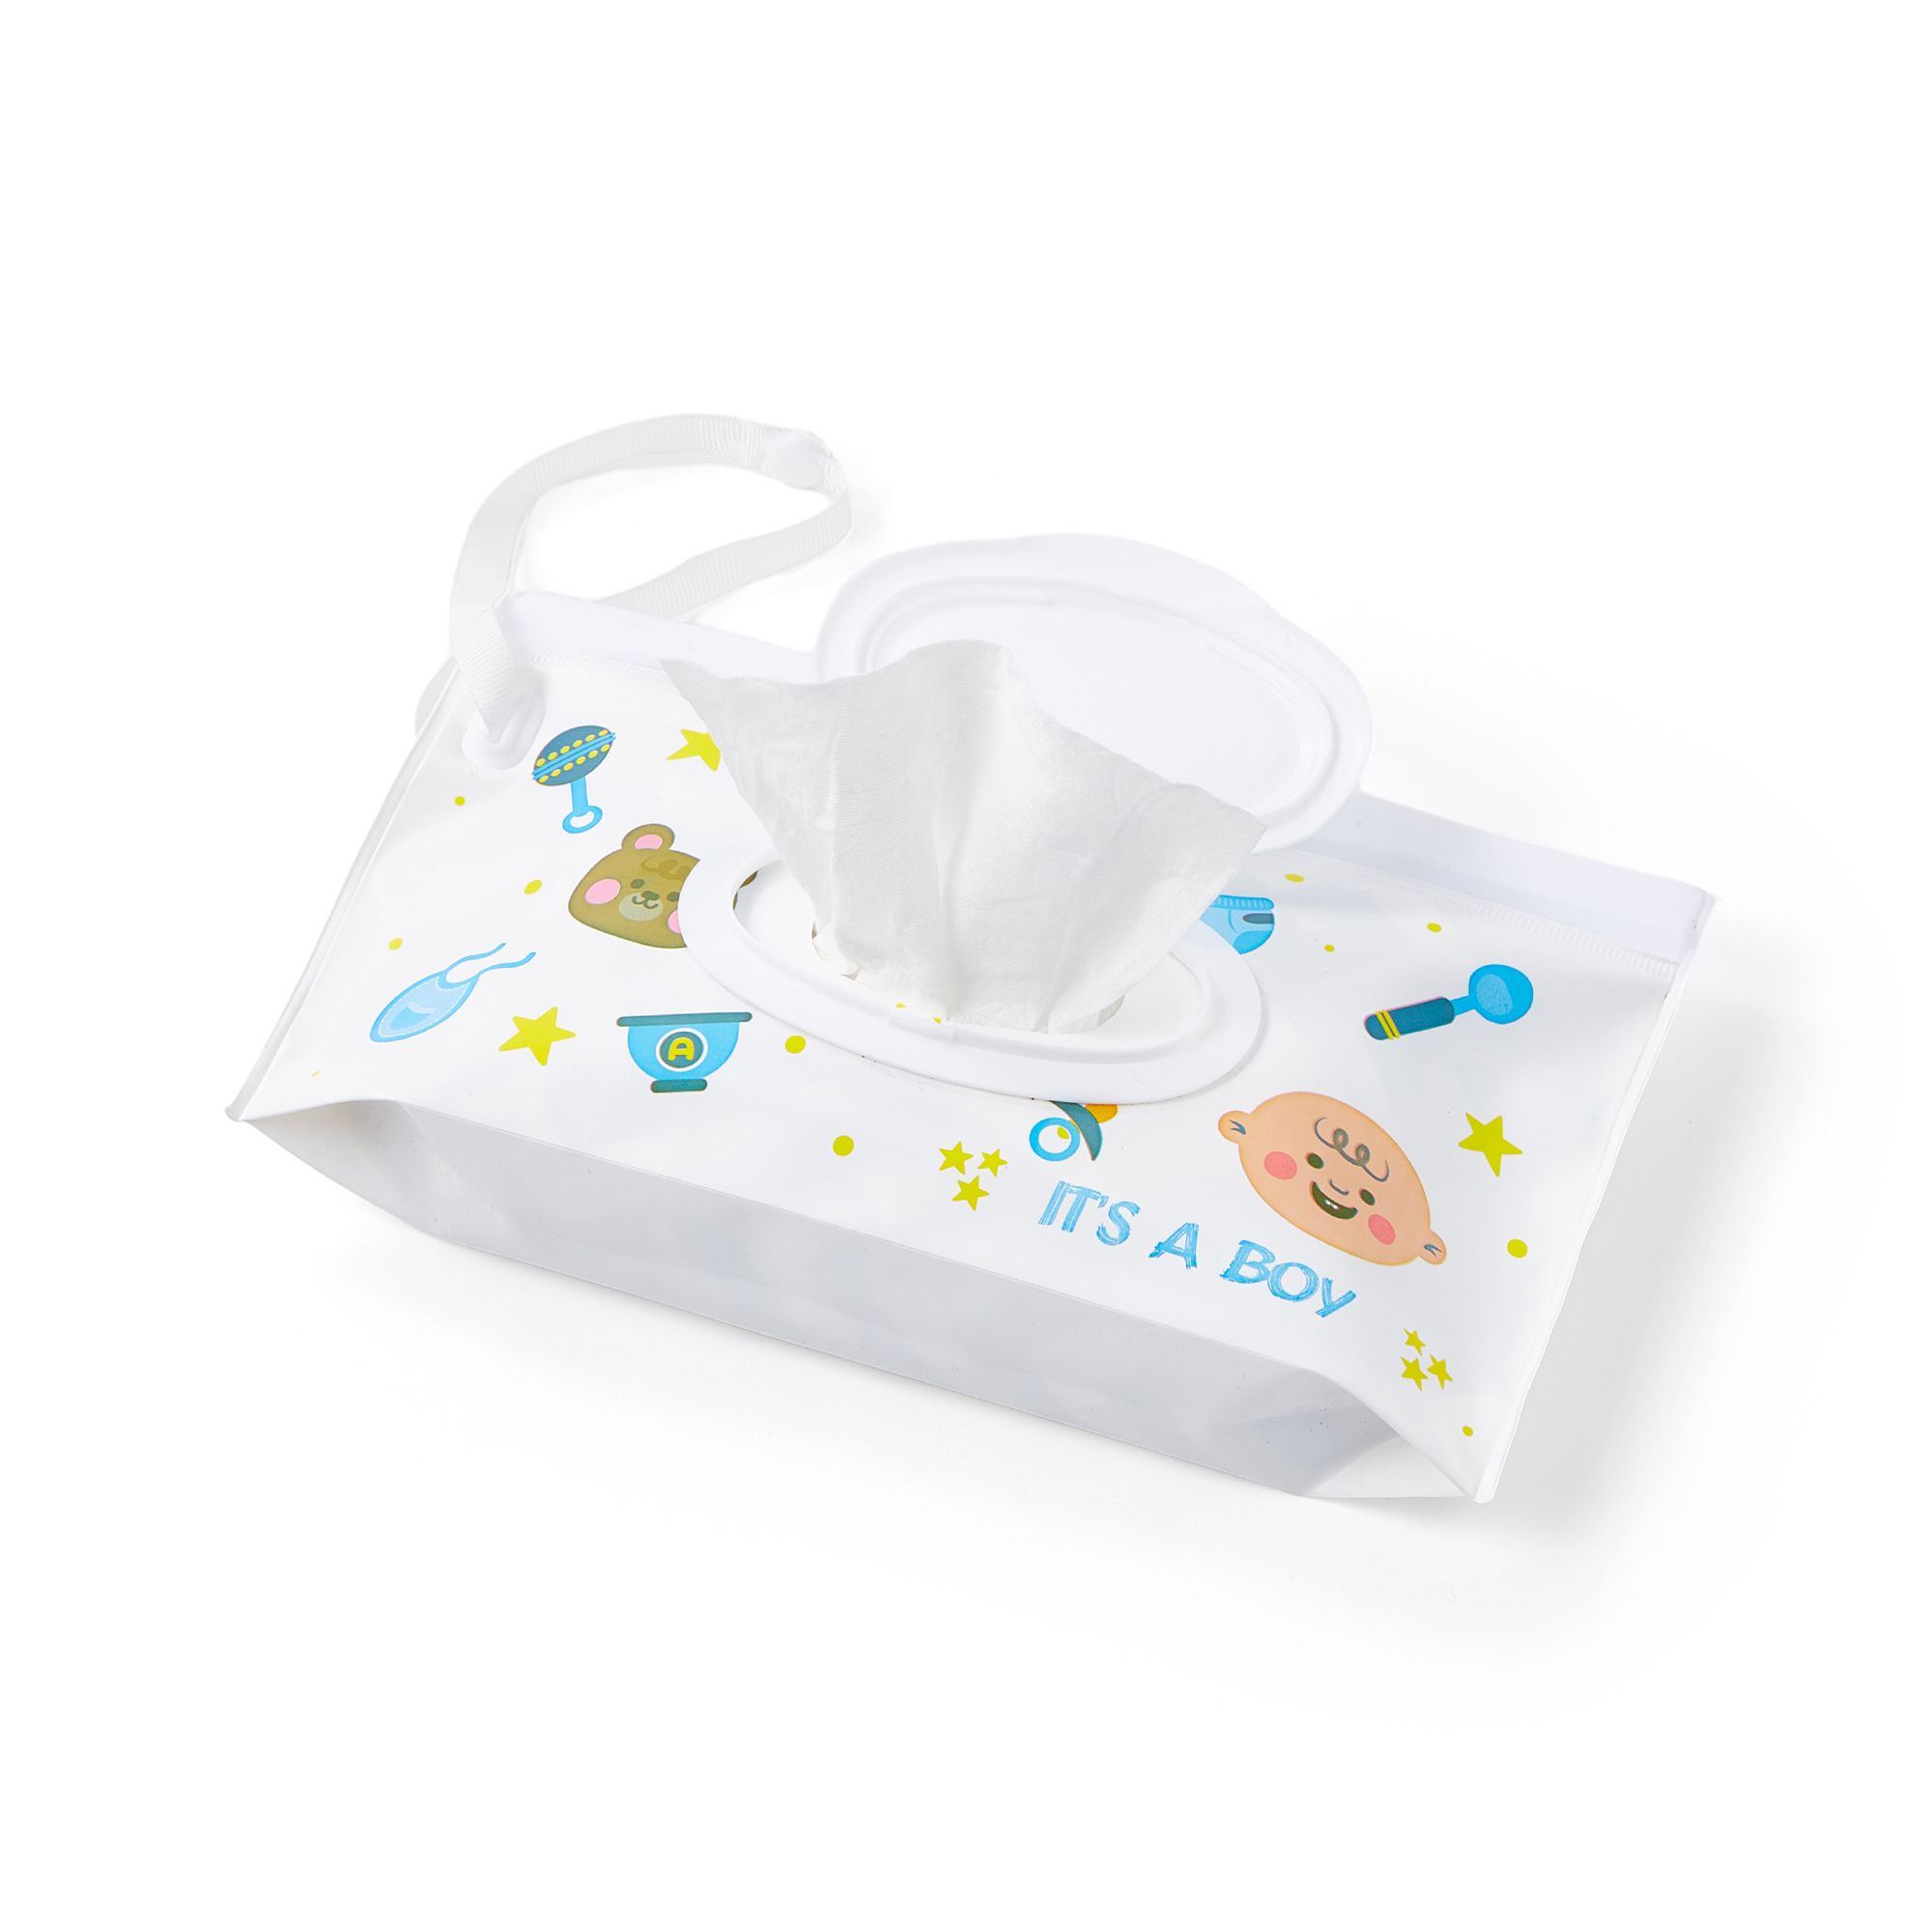 Portable PEVA Flip-top Baby Wipes In Single Pack